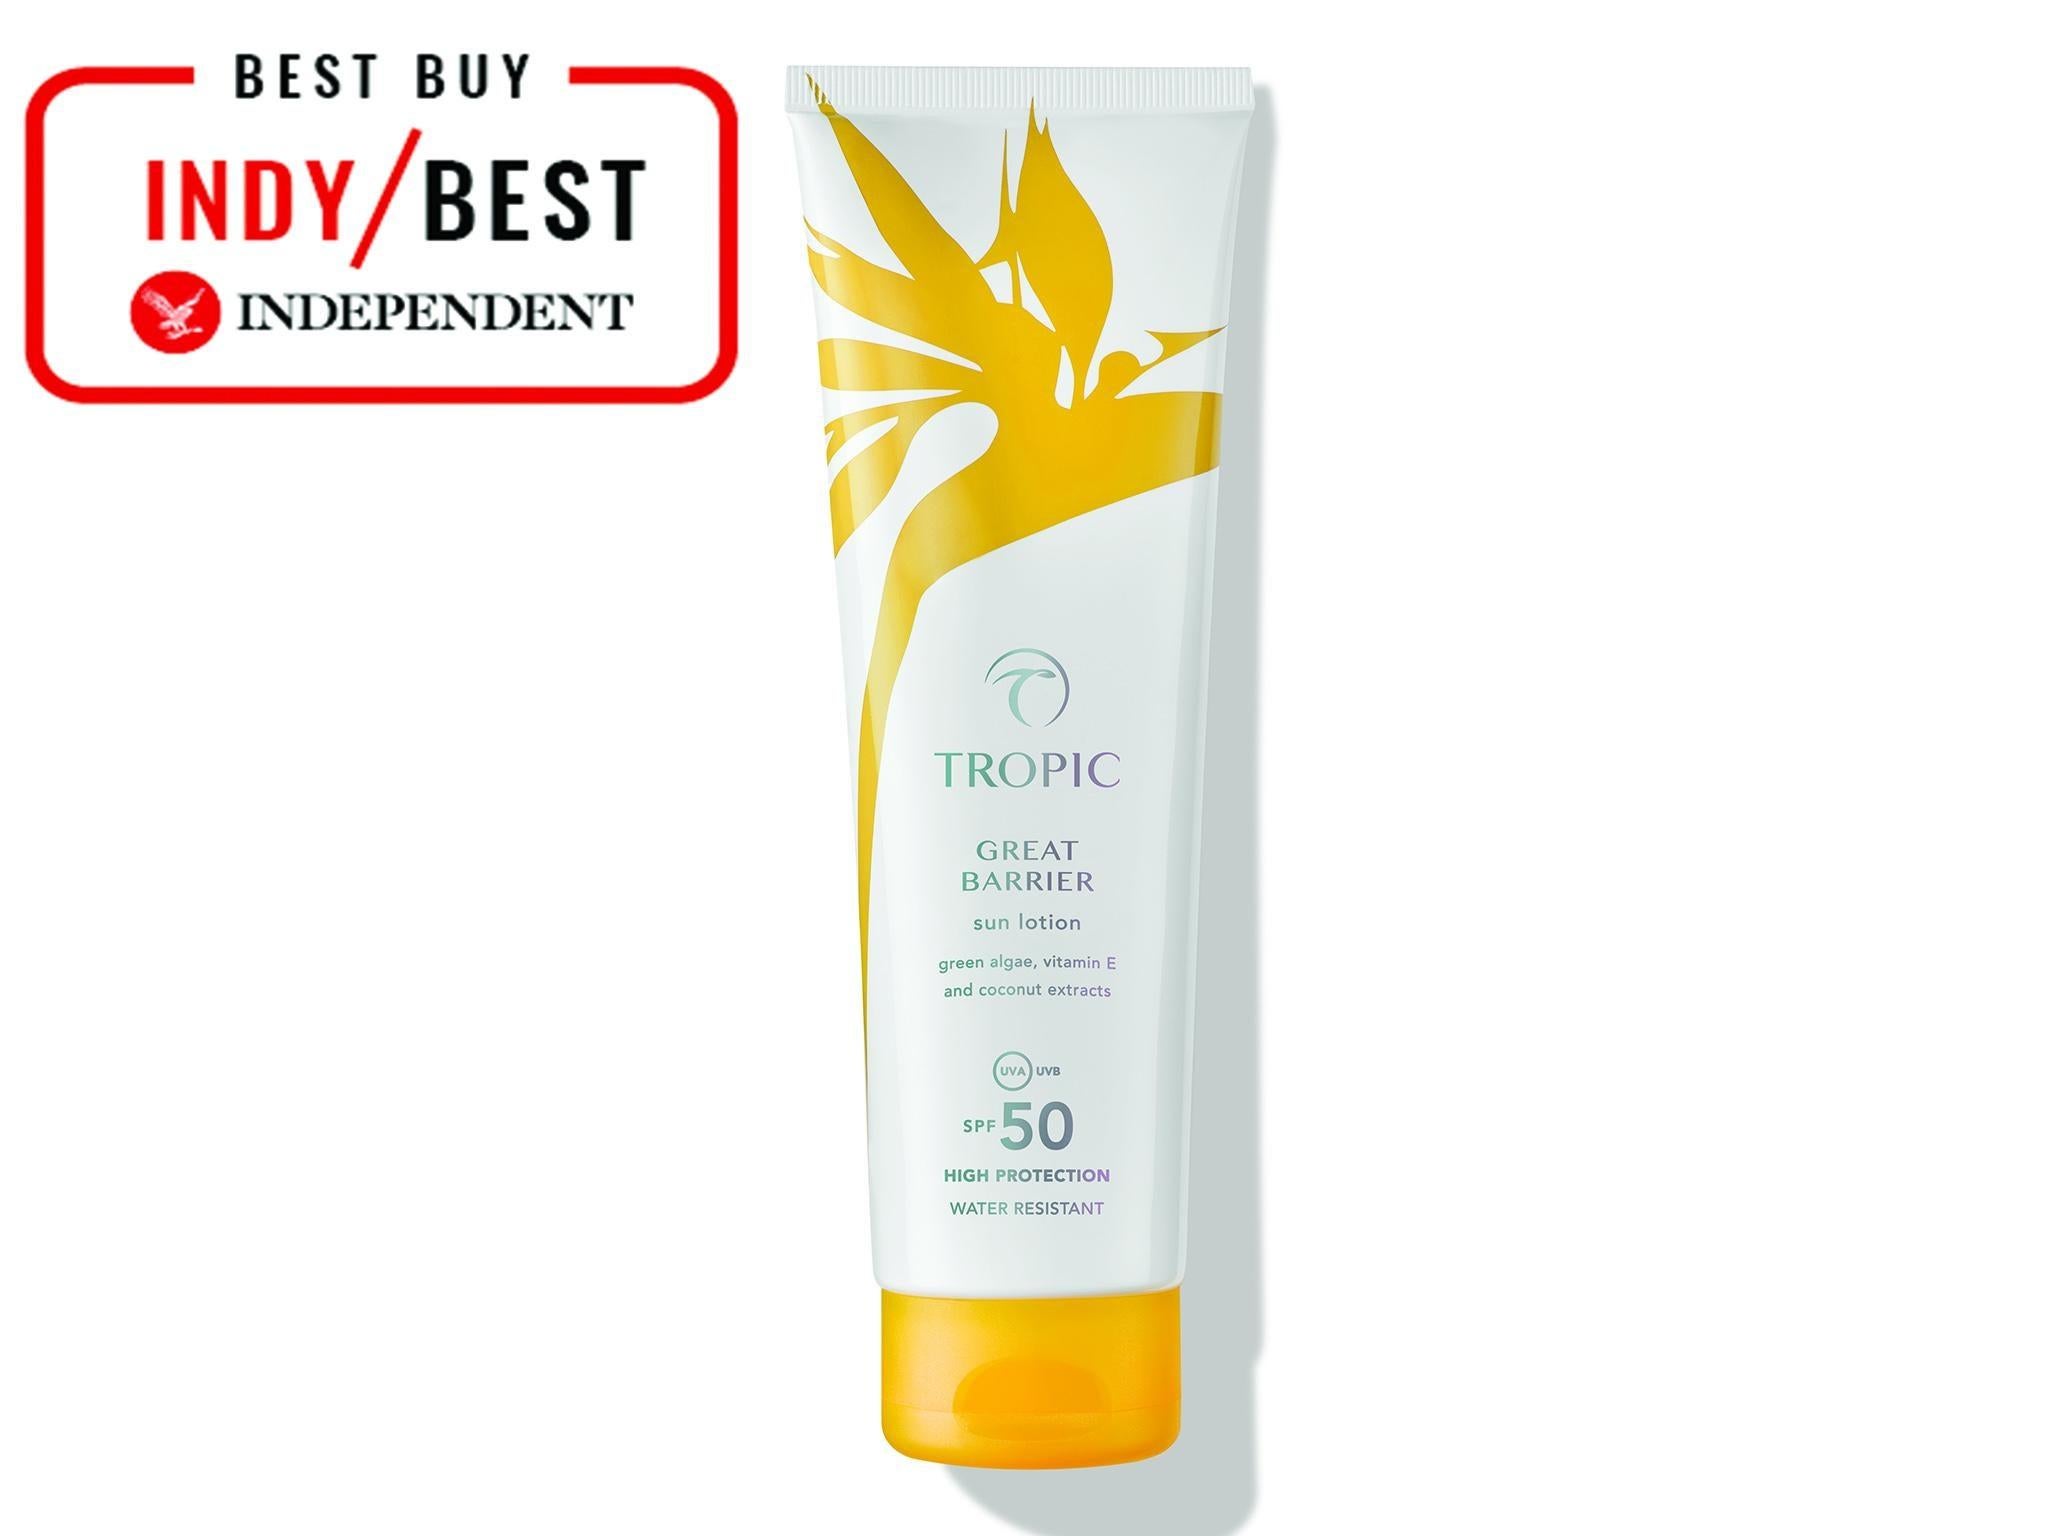 tropic-great-barrier-reef-safe-sunscreen-indybest-best-eco-friendly-sunscreen.jpg